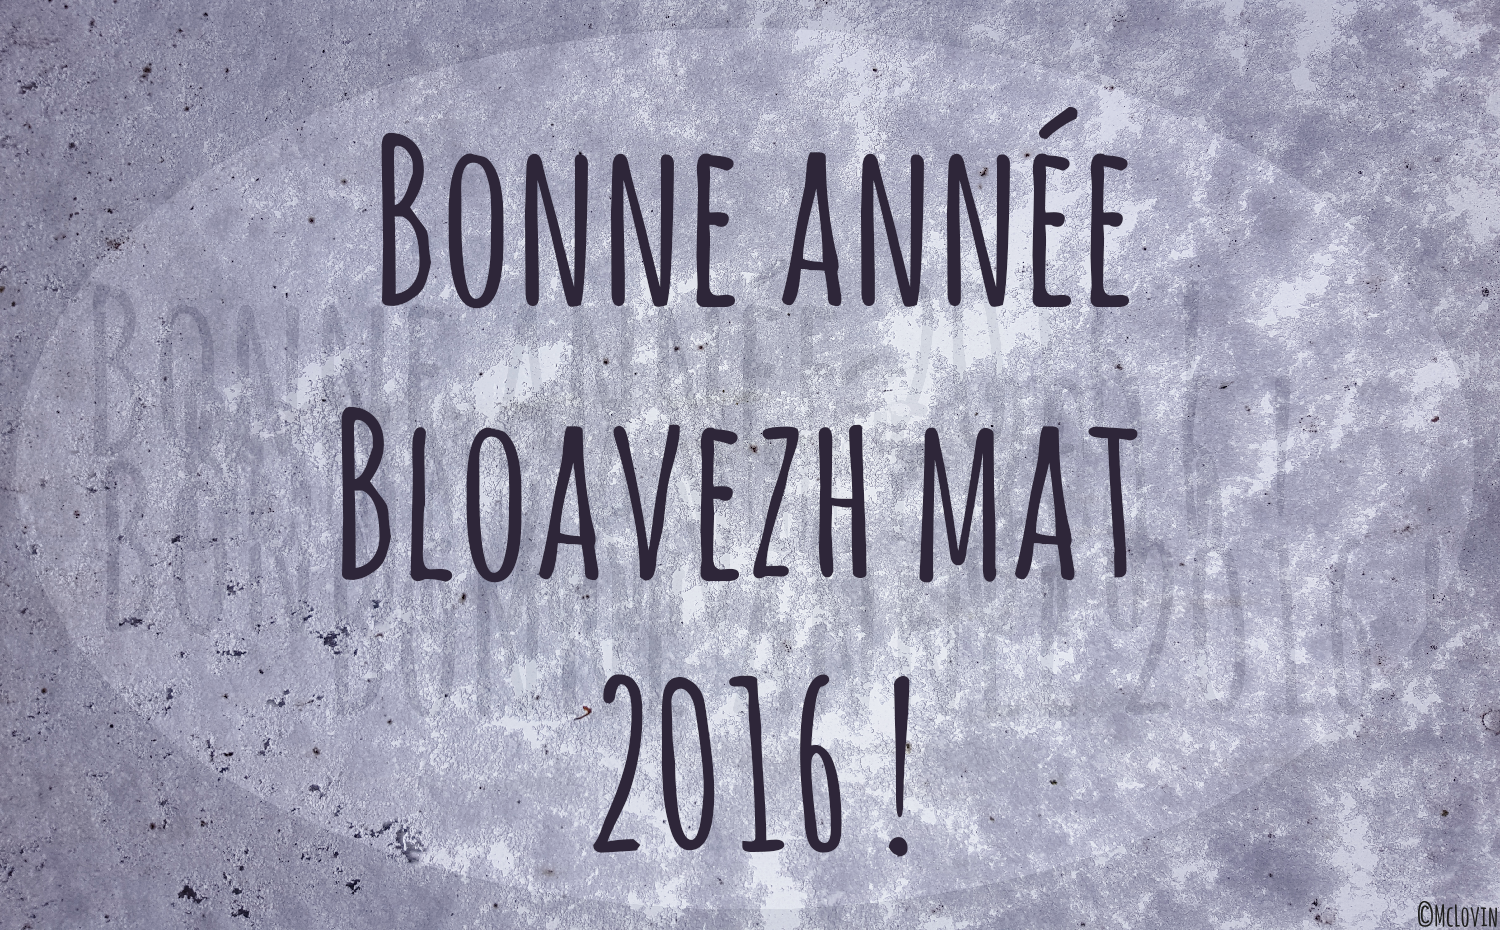 Bonne année 2016 ! Bloavezh mat 2016 !